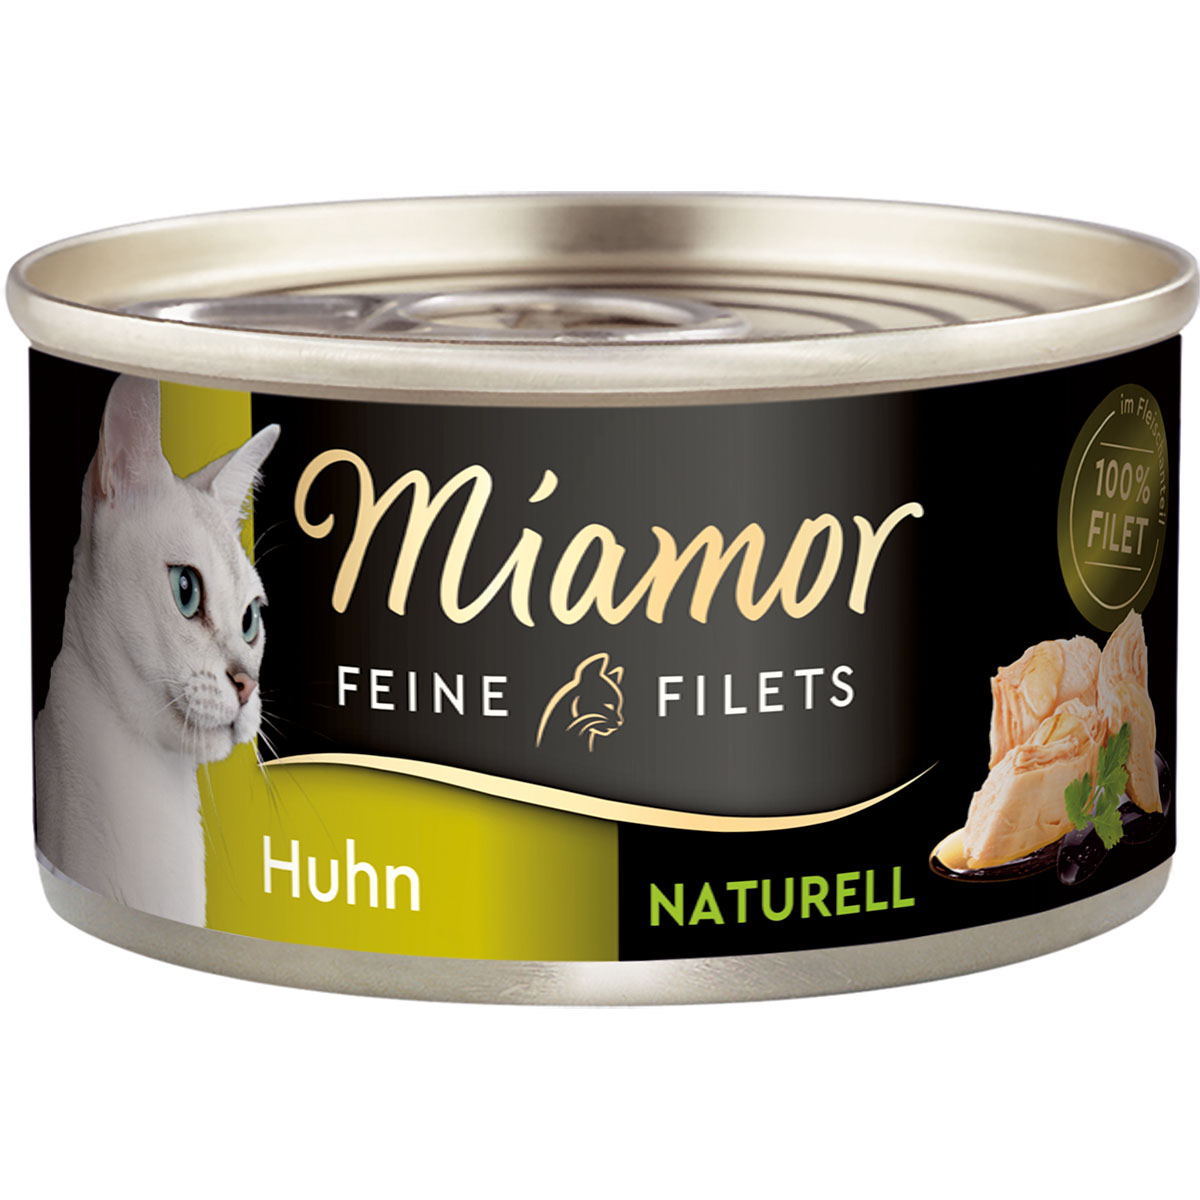 Miamor Feine Filets Naturelle Huhn Pur 80g Dose 24x80g